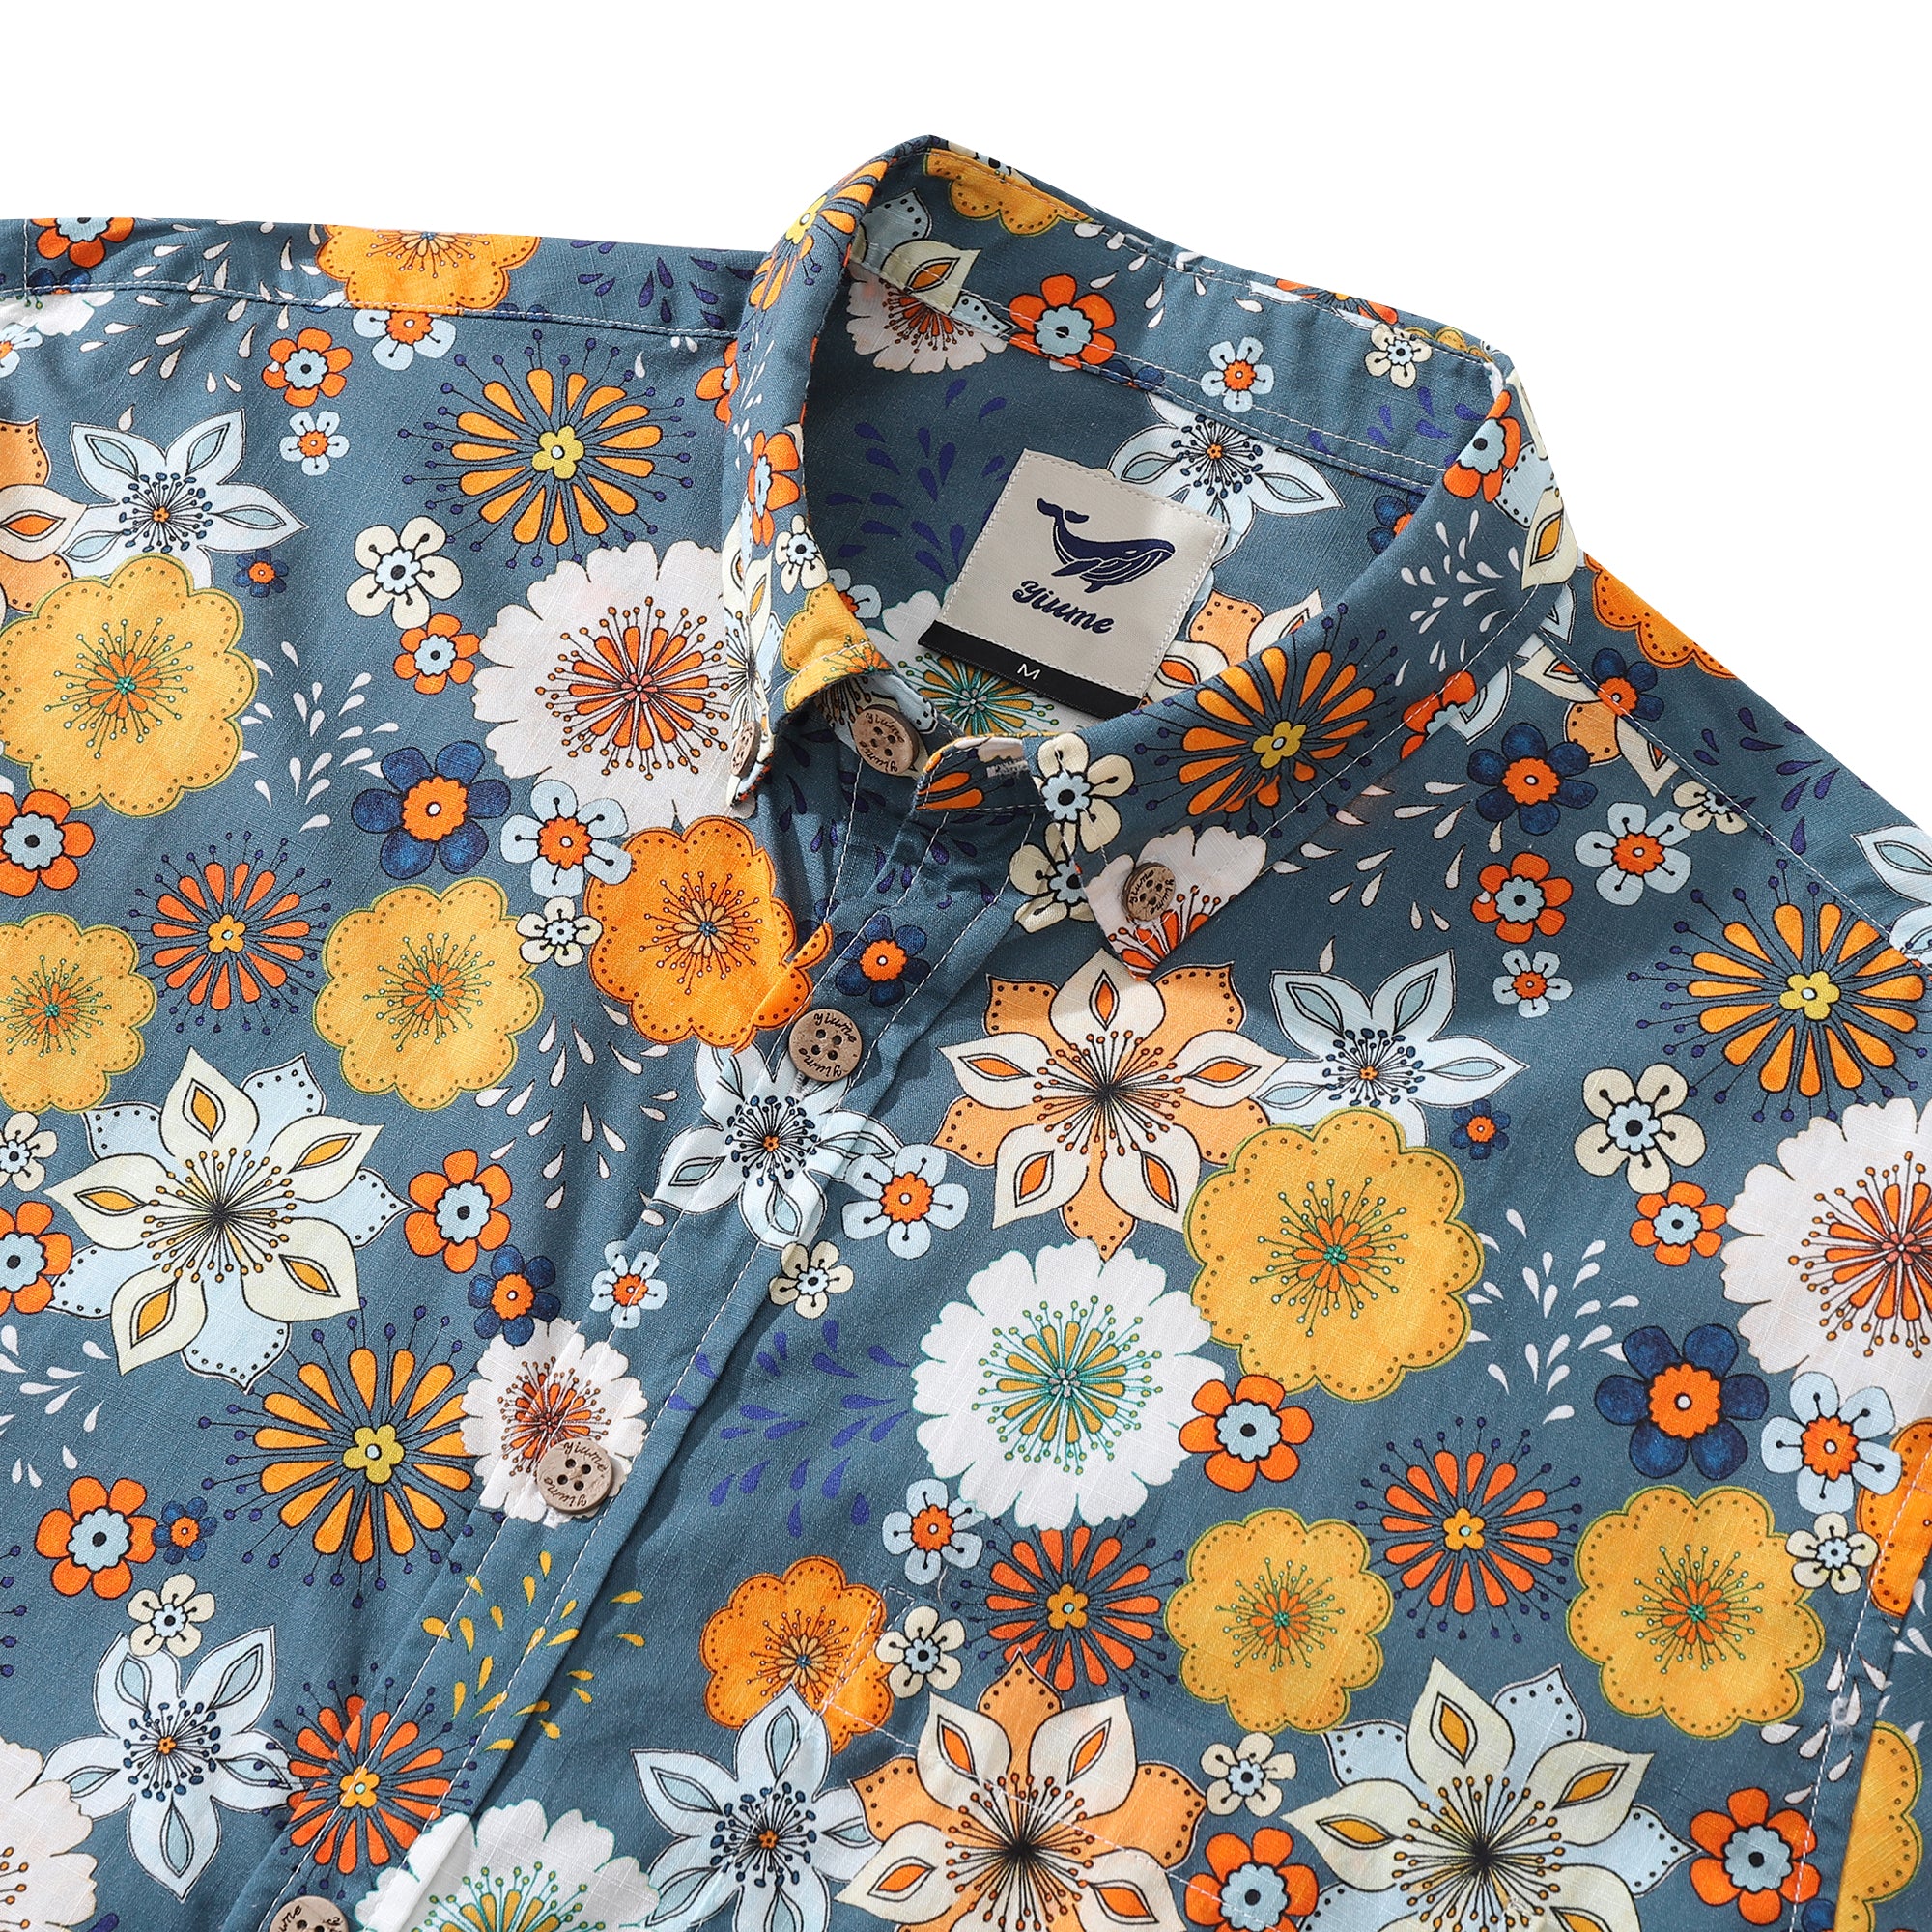 Men's Long Sleeve Hawaiian Shirt 60's Floral Print By Samantha O' Malley Cotton Button-down Aloha Shirt